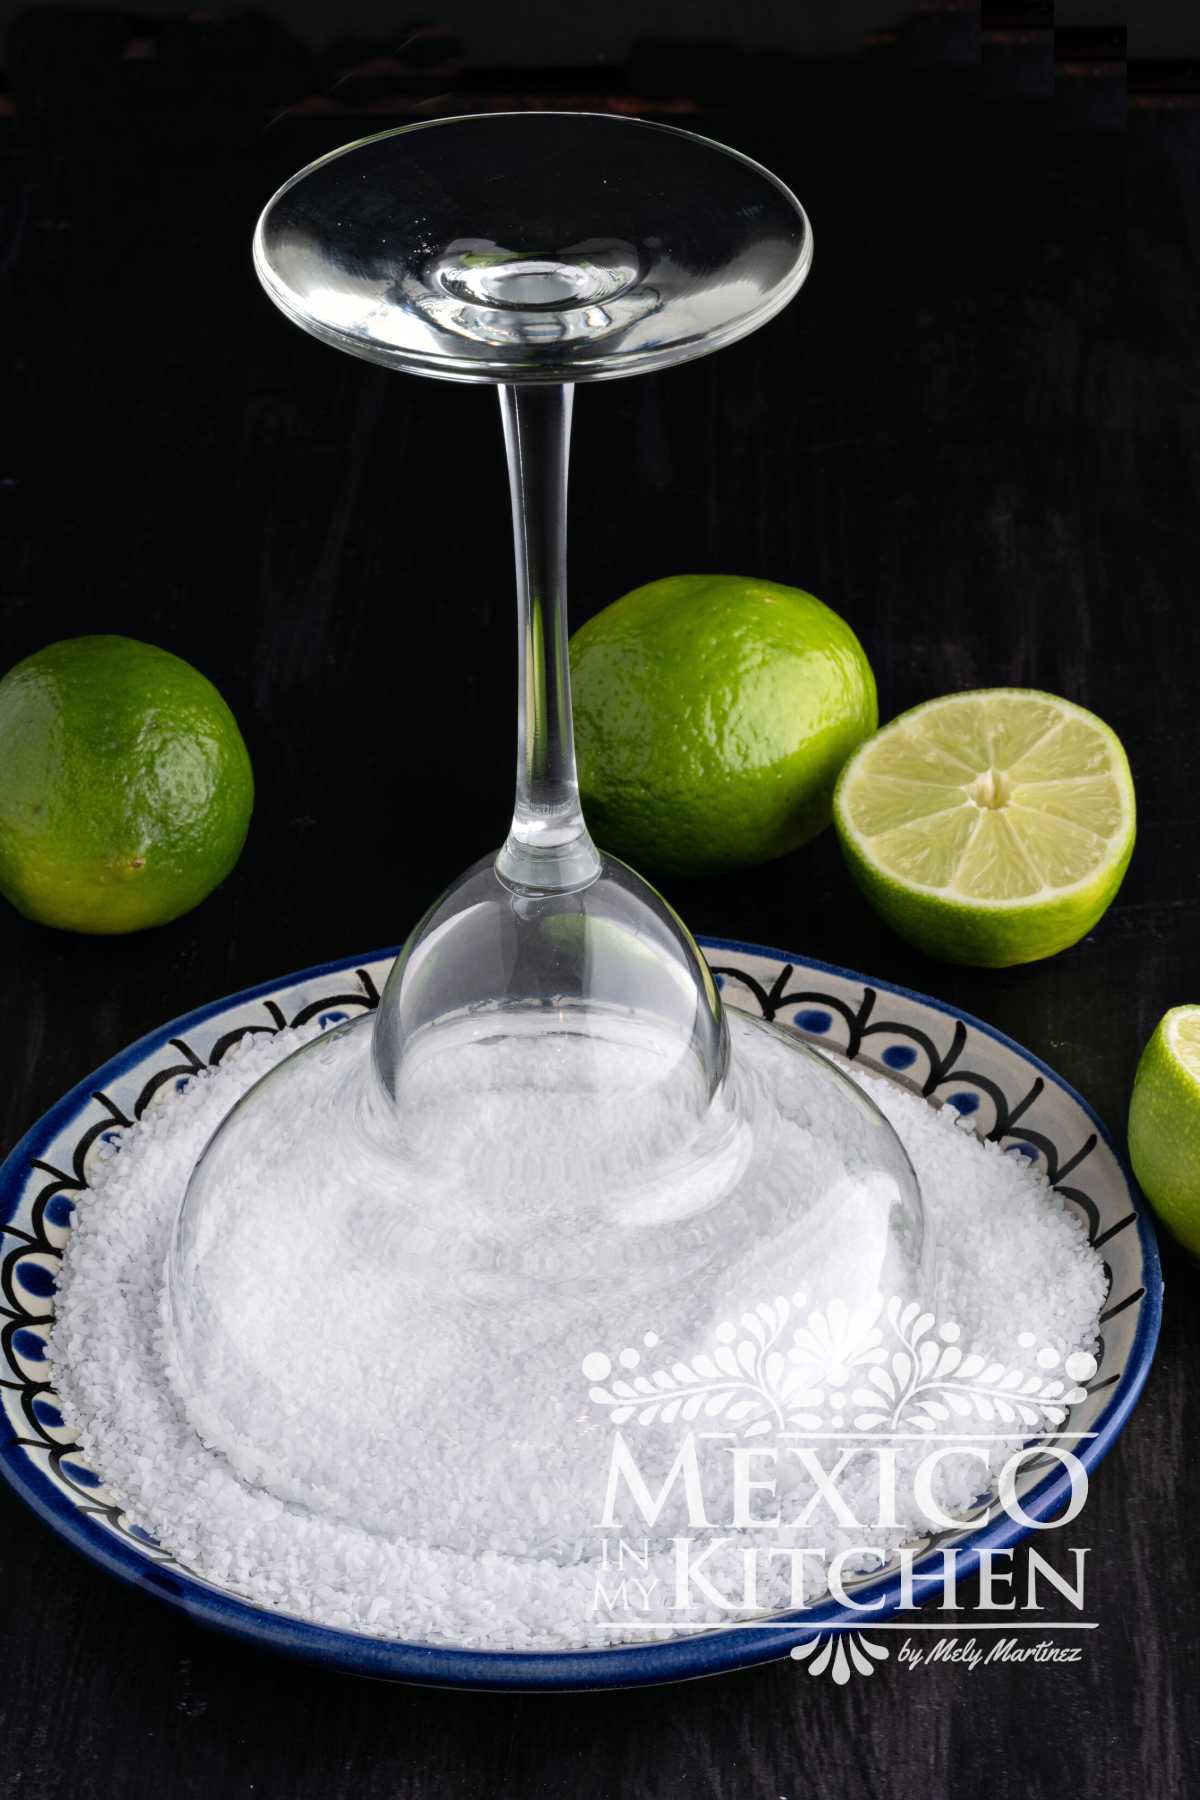 Upside-down cocktail glass over a plate of kosher salt.